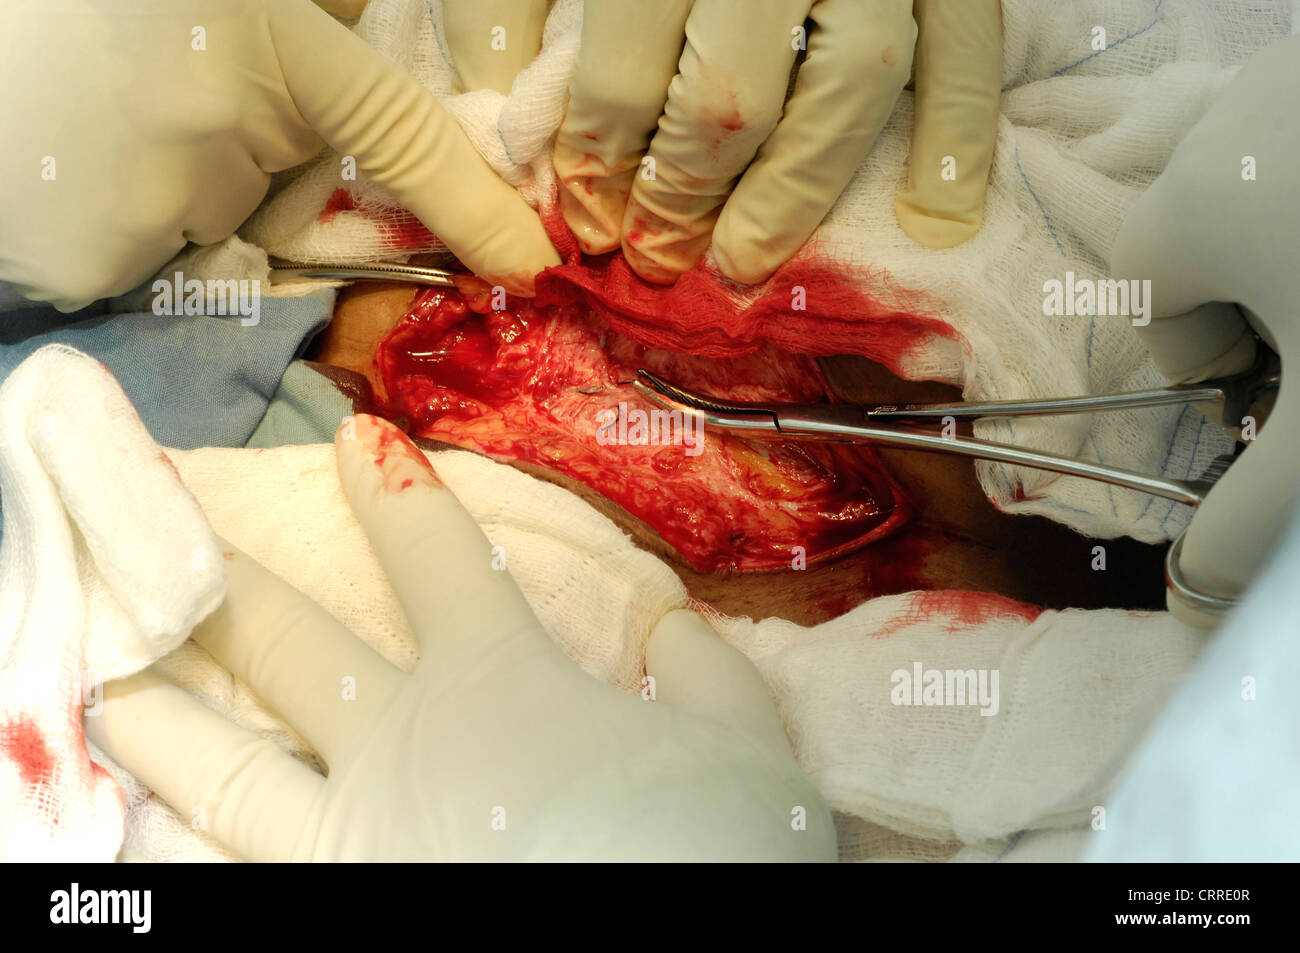 The surgeon prepares to open the abdominal cavity. Stock Photo